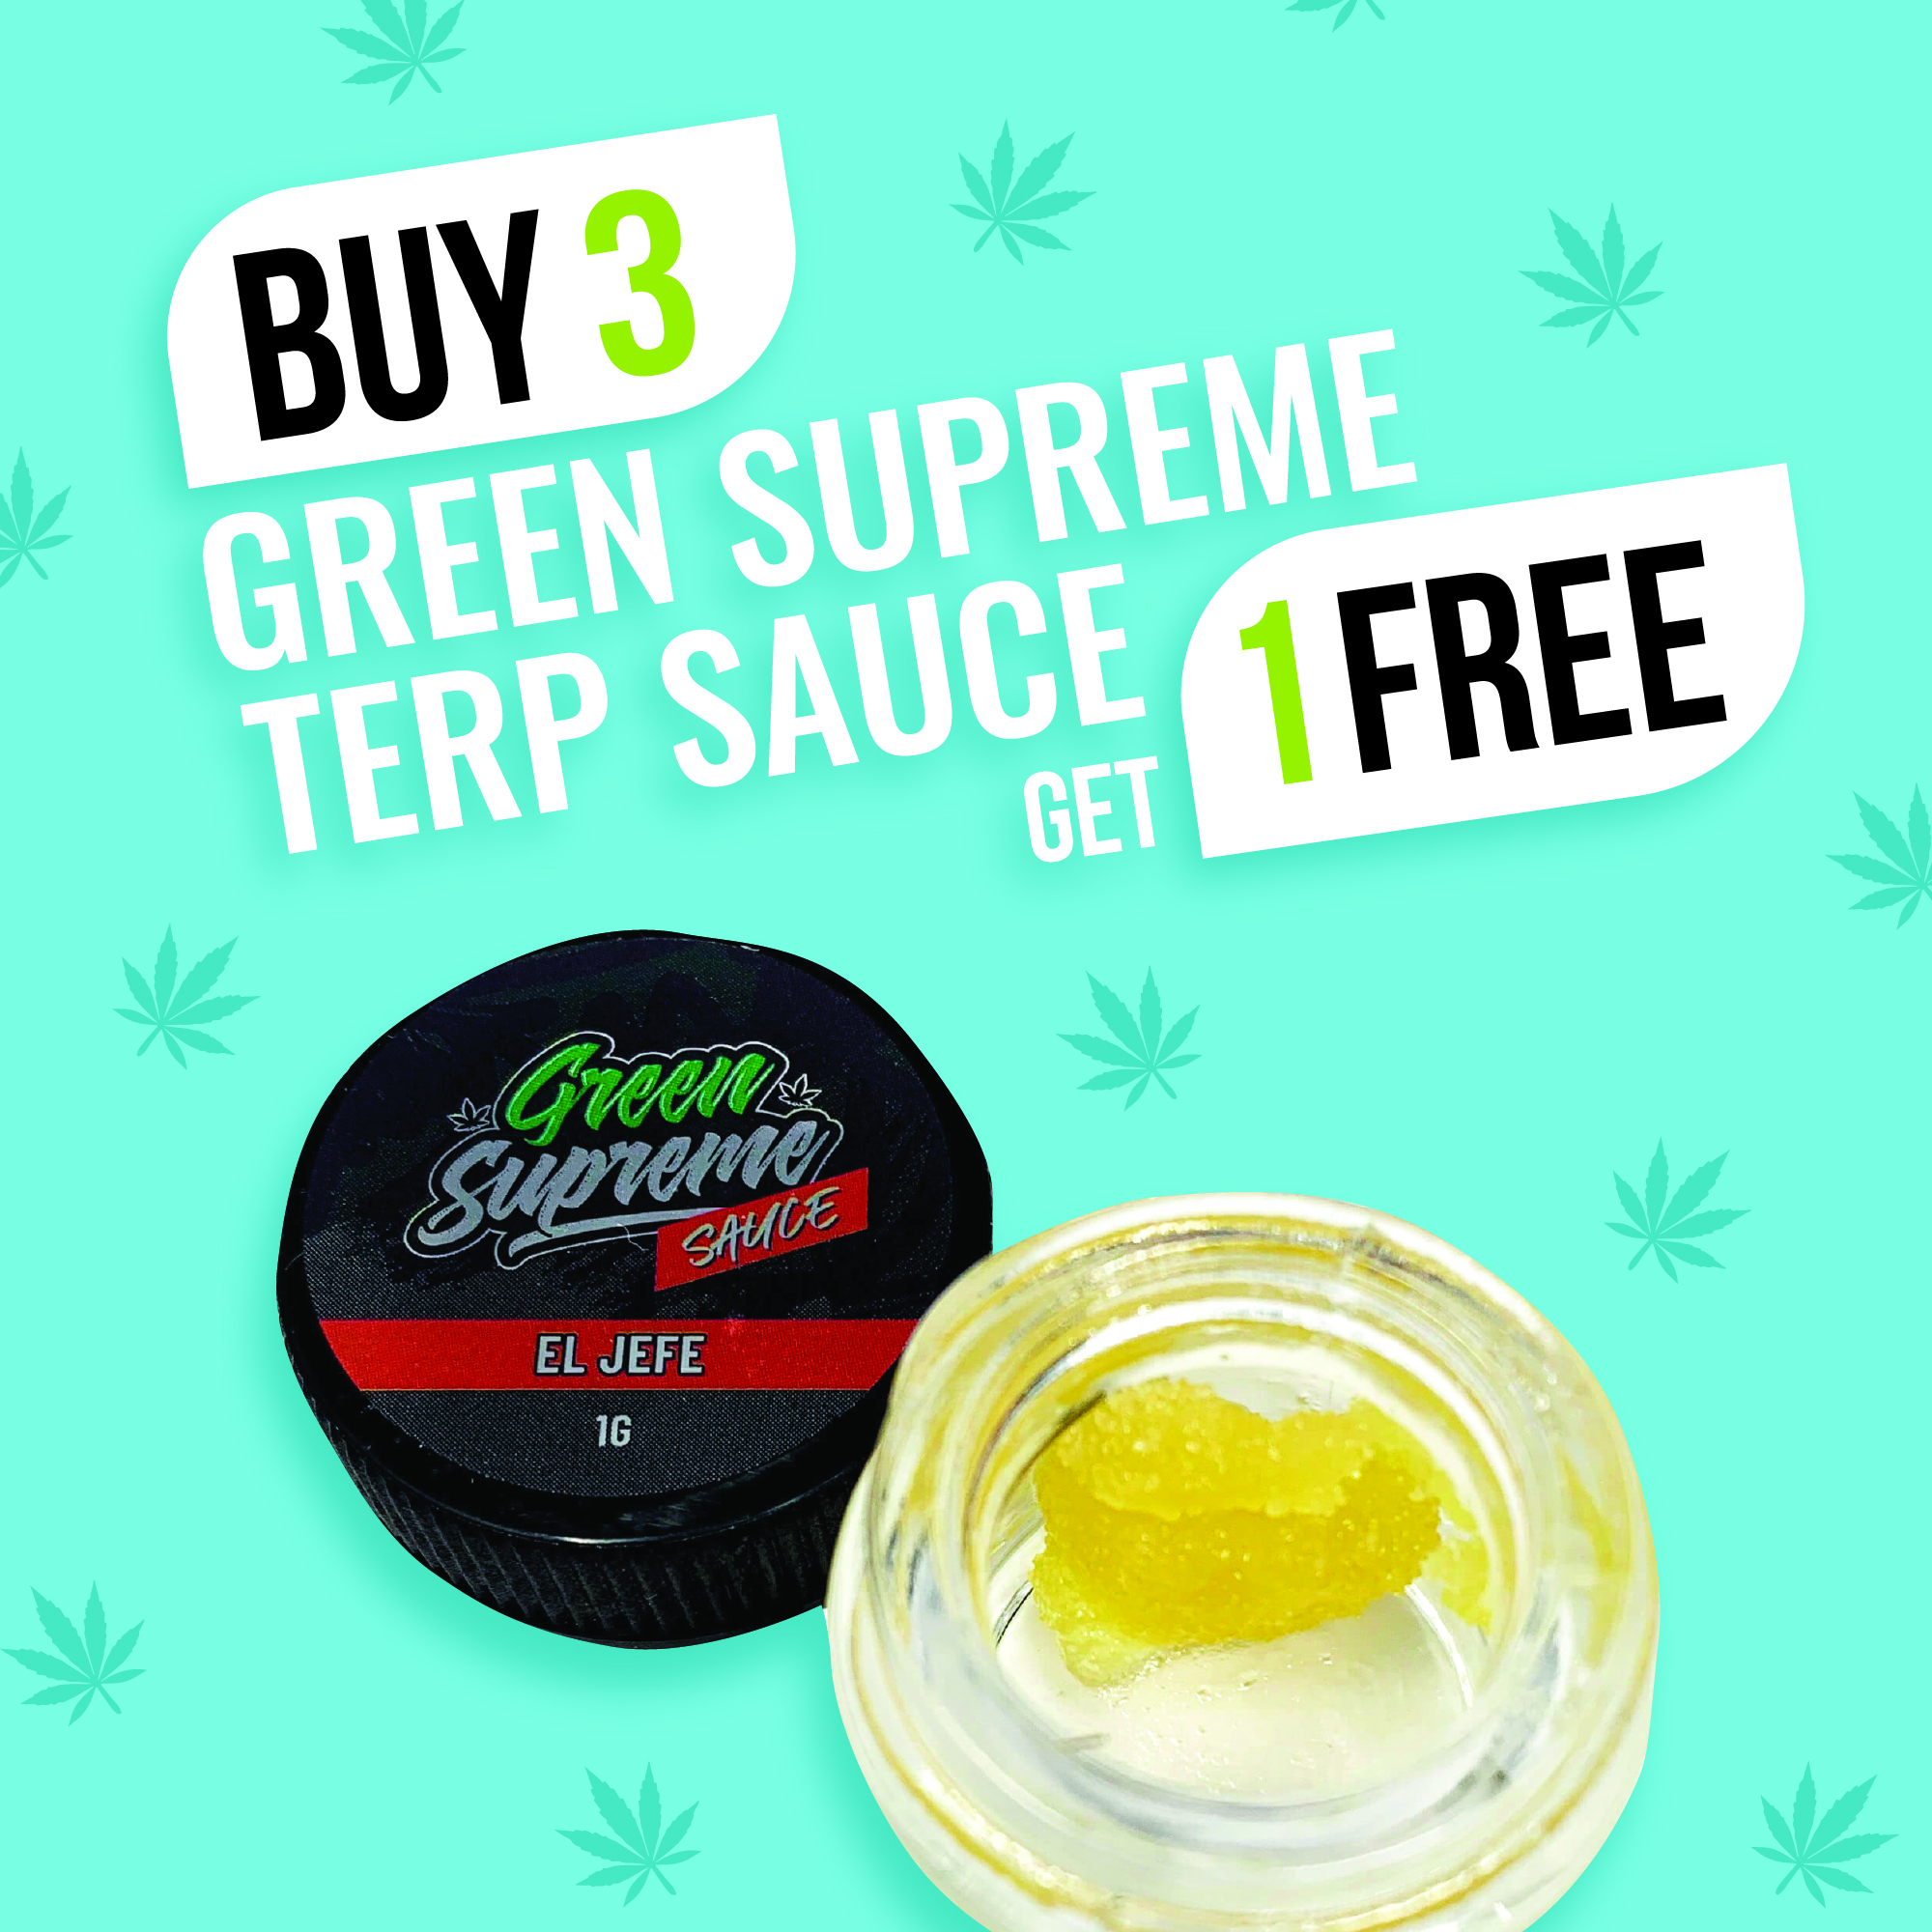 Buy 3 get 1 Free Green Supreme